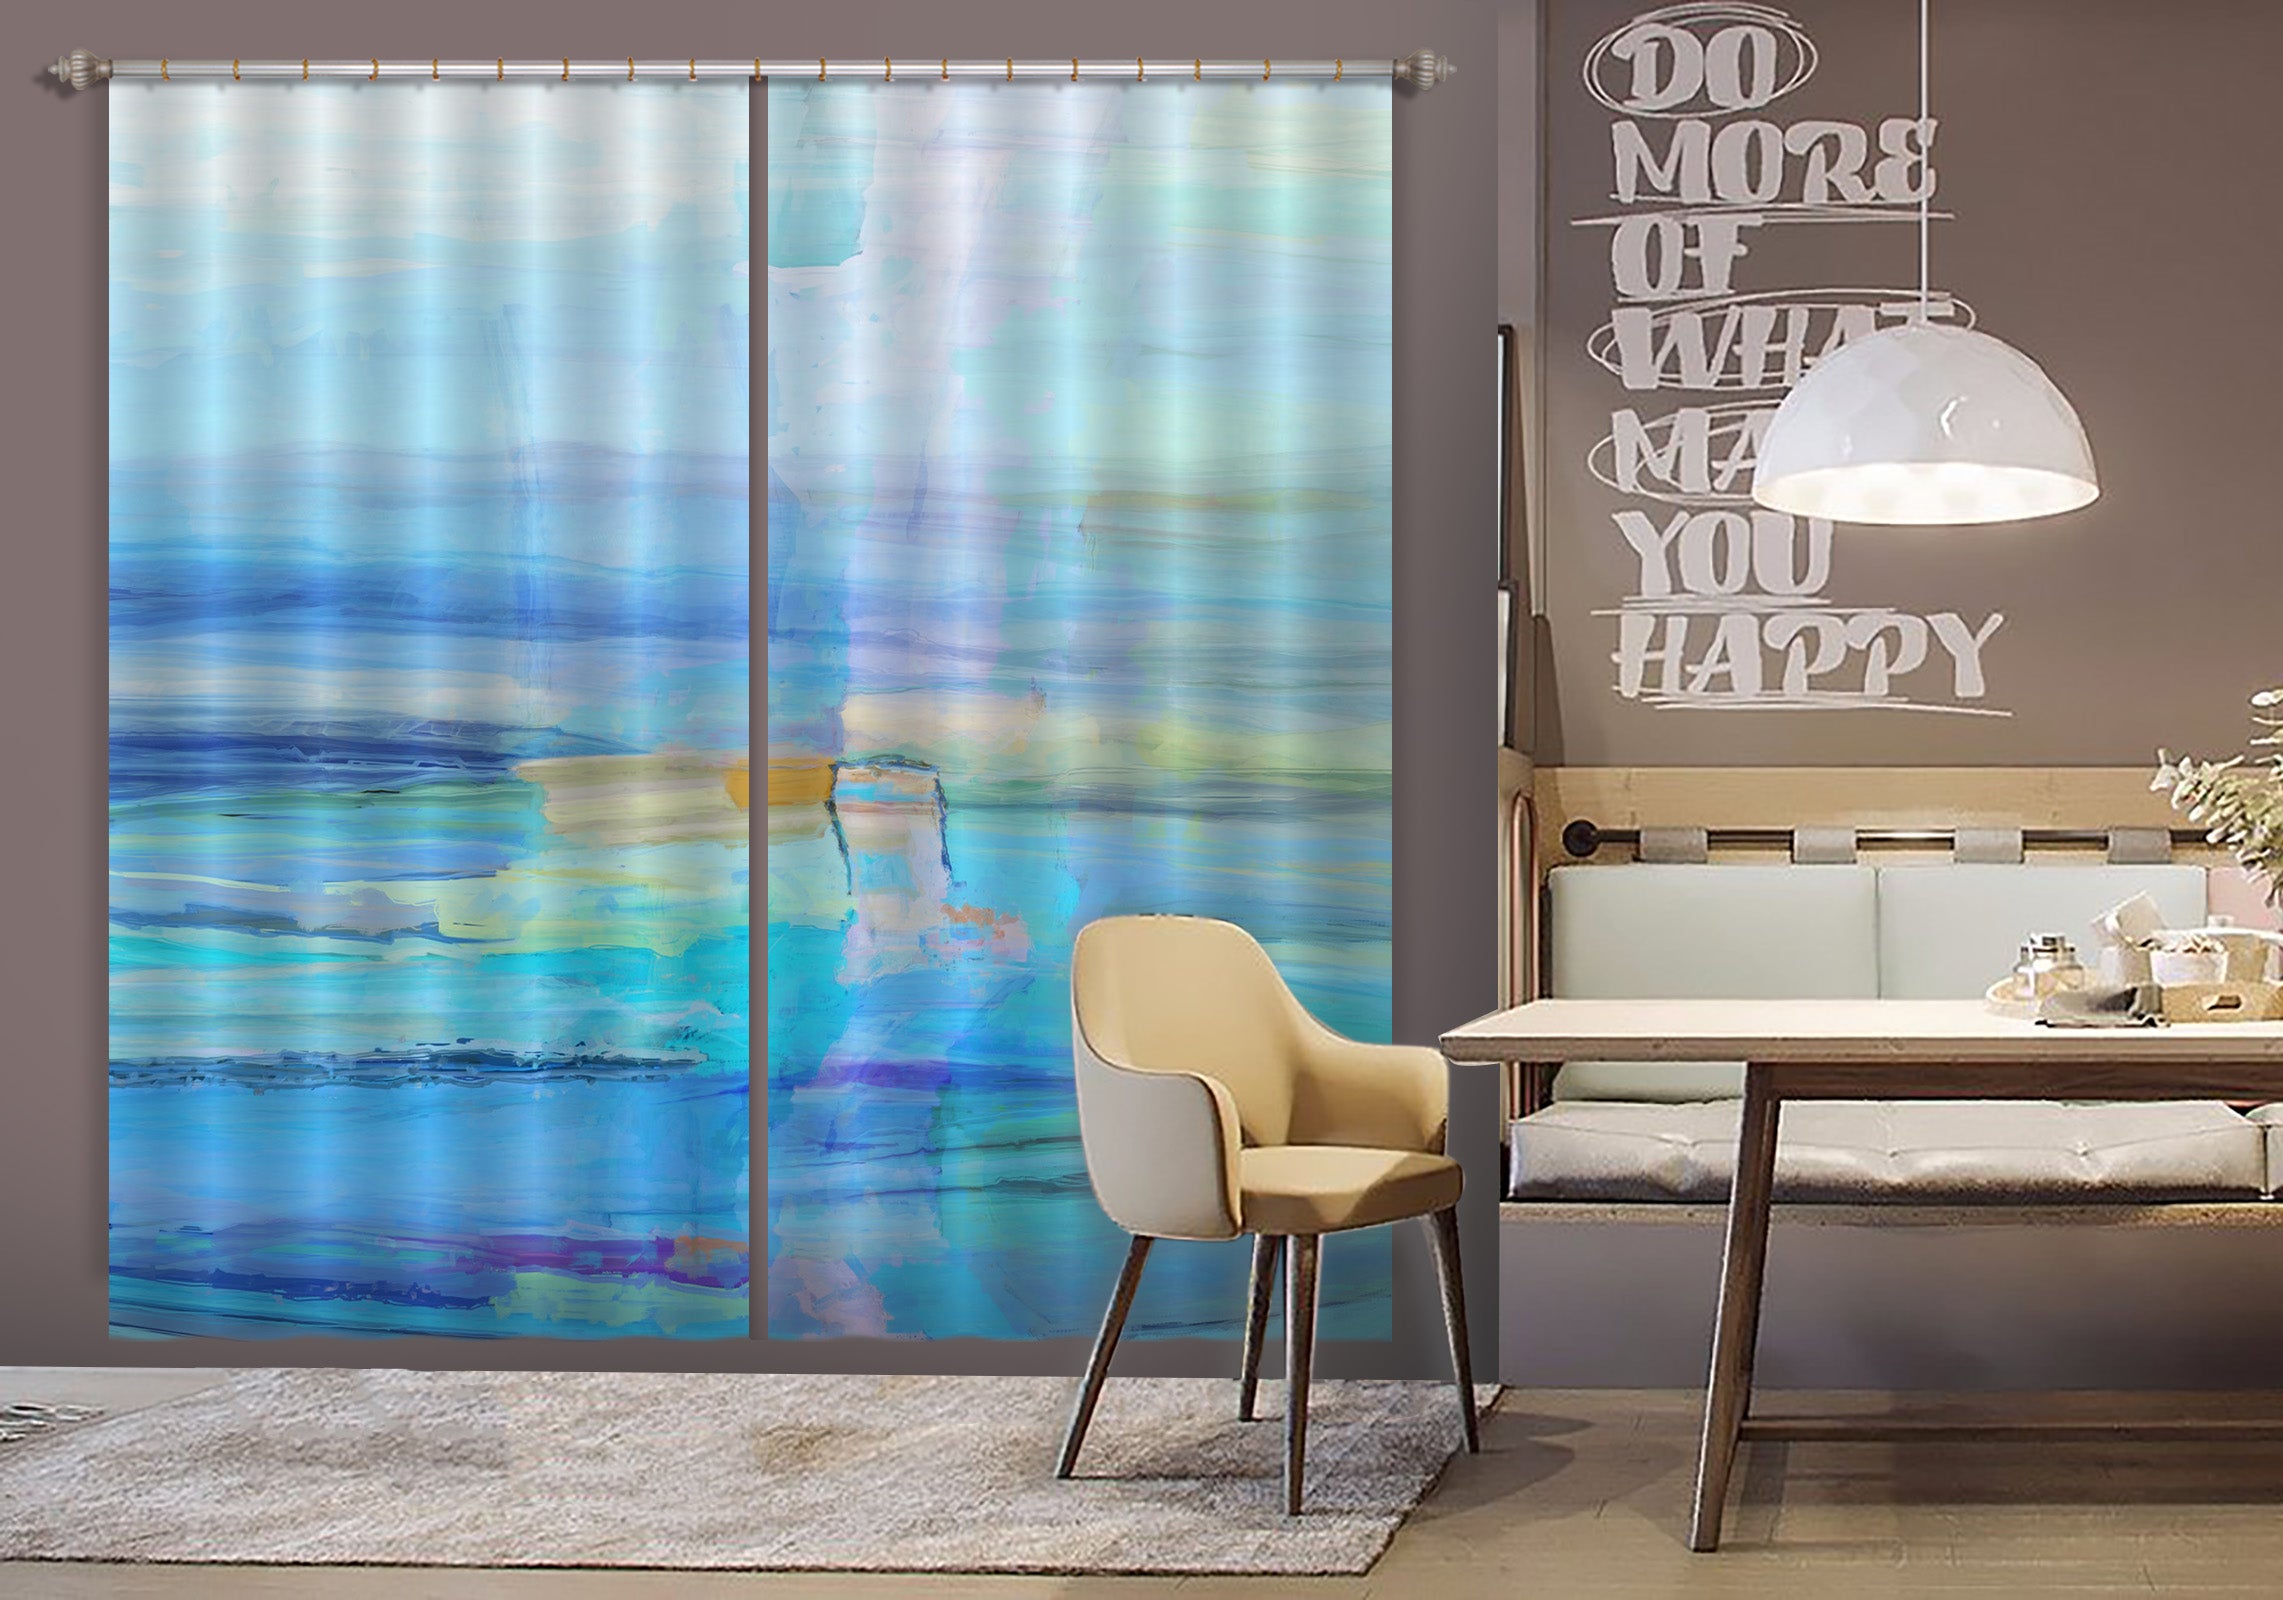 3D Blue Sea 045 Michael Tienhaara Curtain Curtains Drapes